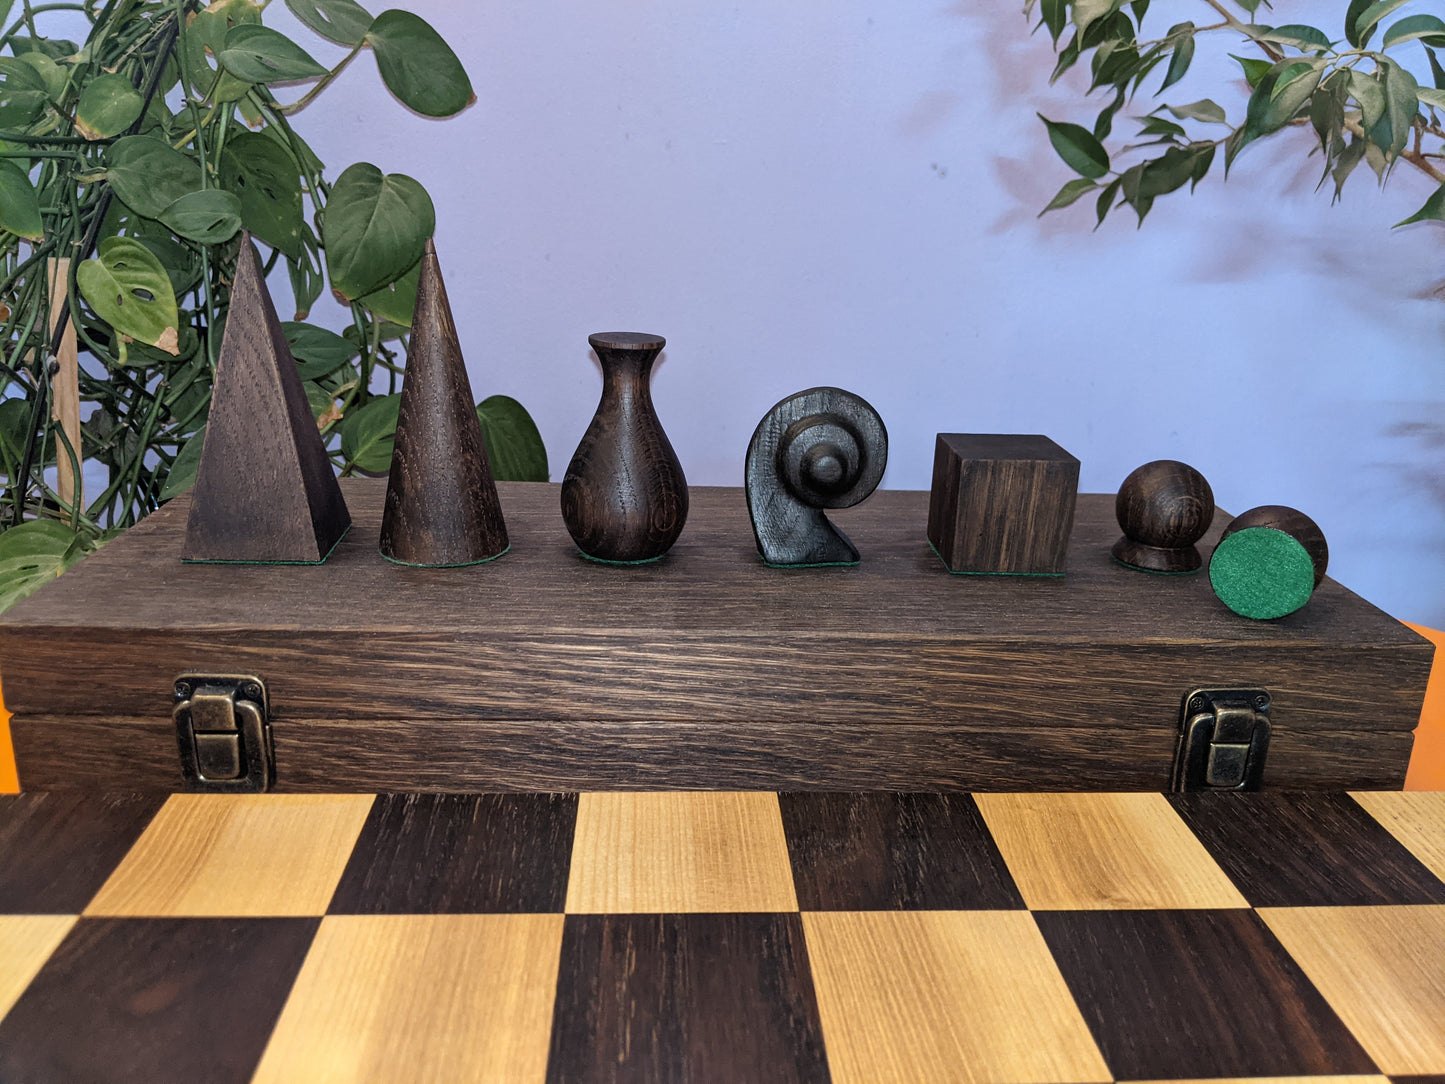 Handmade wood abstract geometric chess set